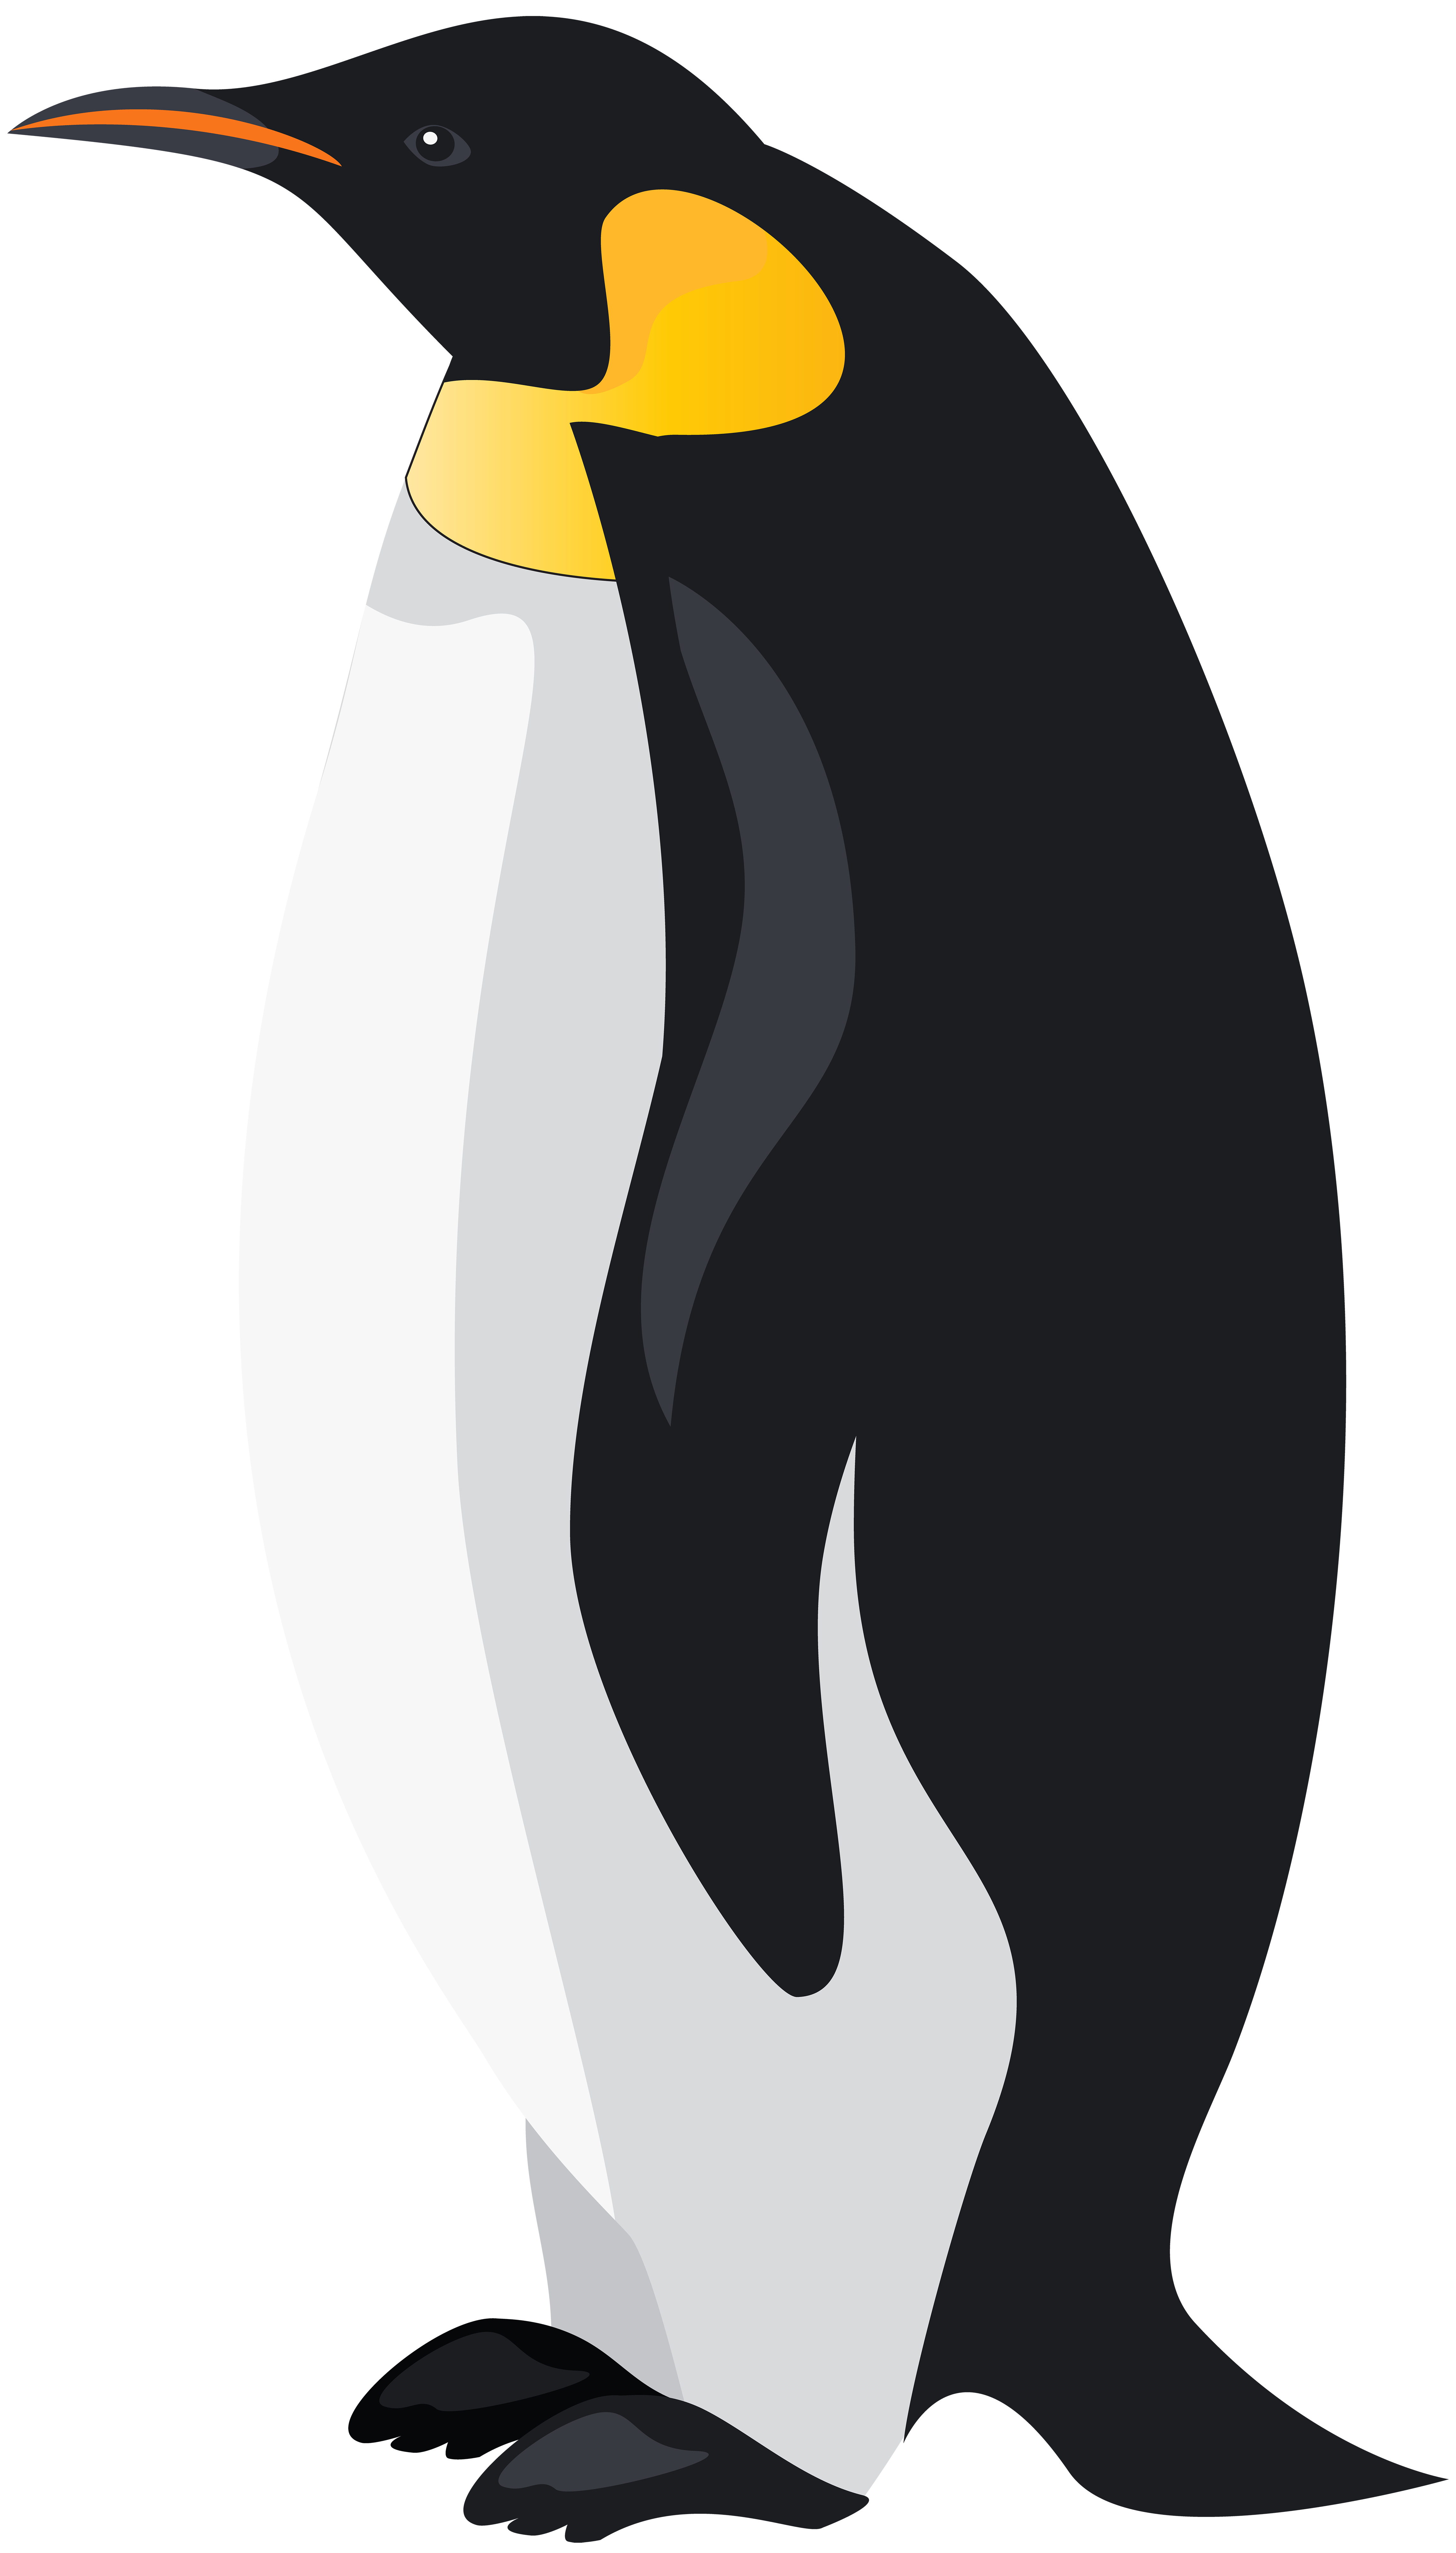 Art Penguin Png & Free Art Penguin.png Transparent Images.